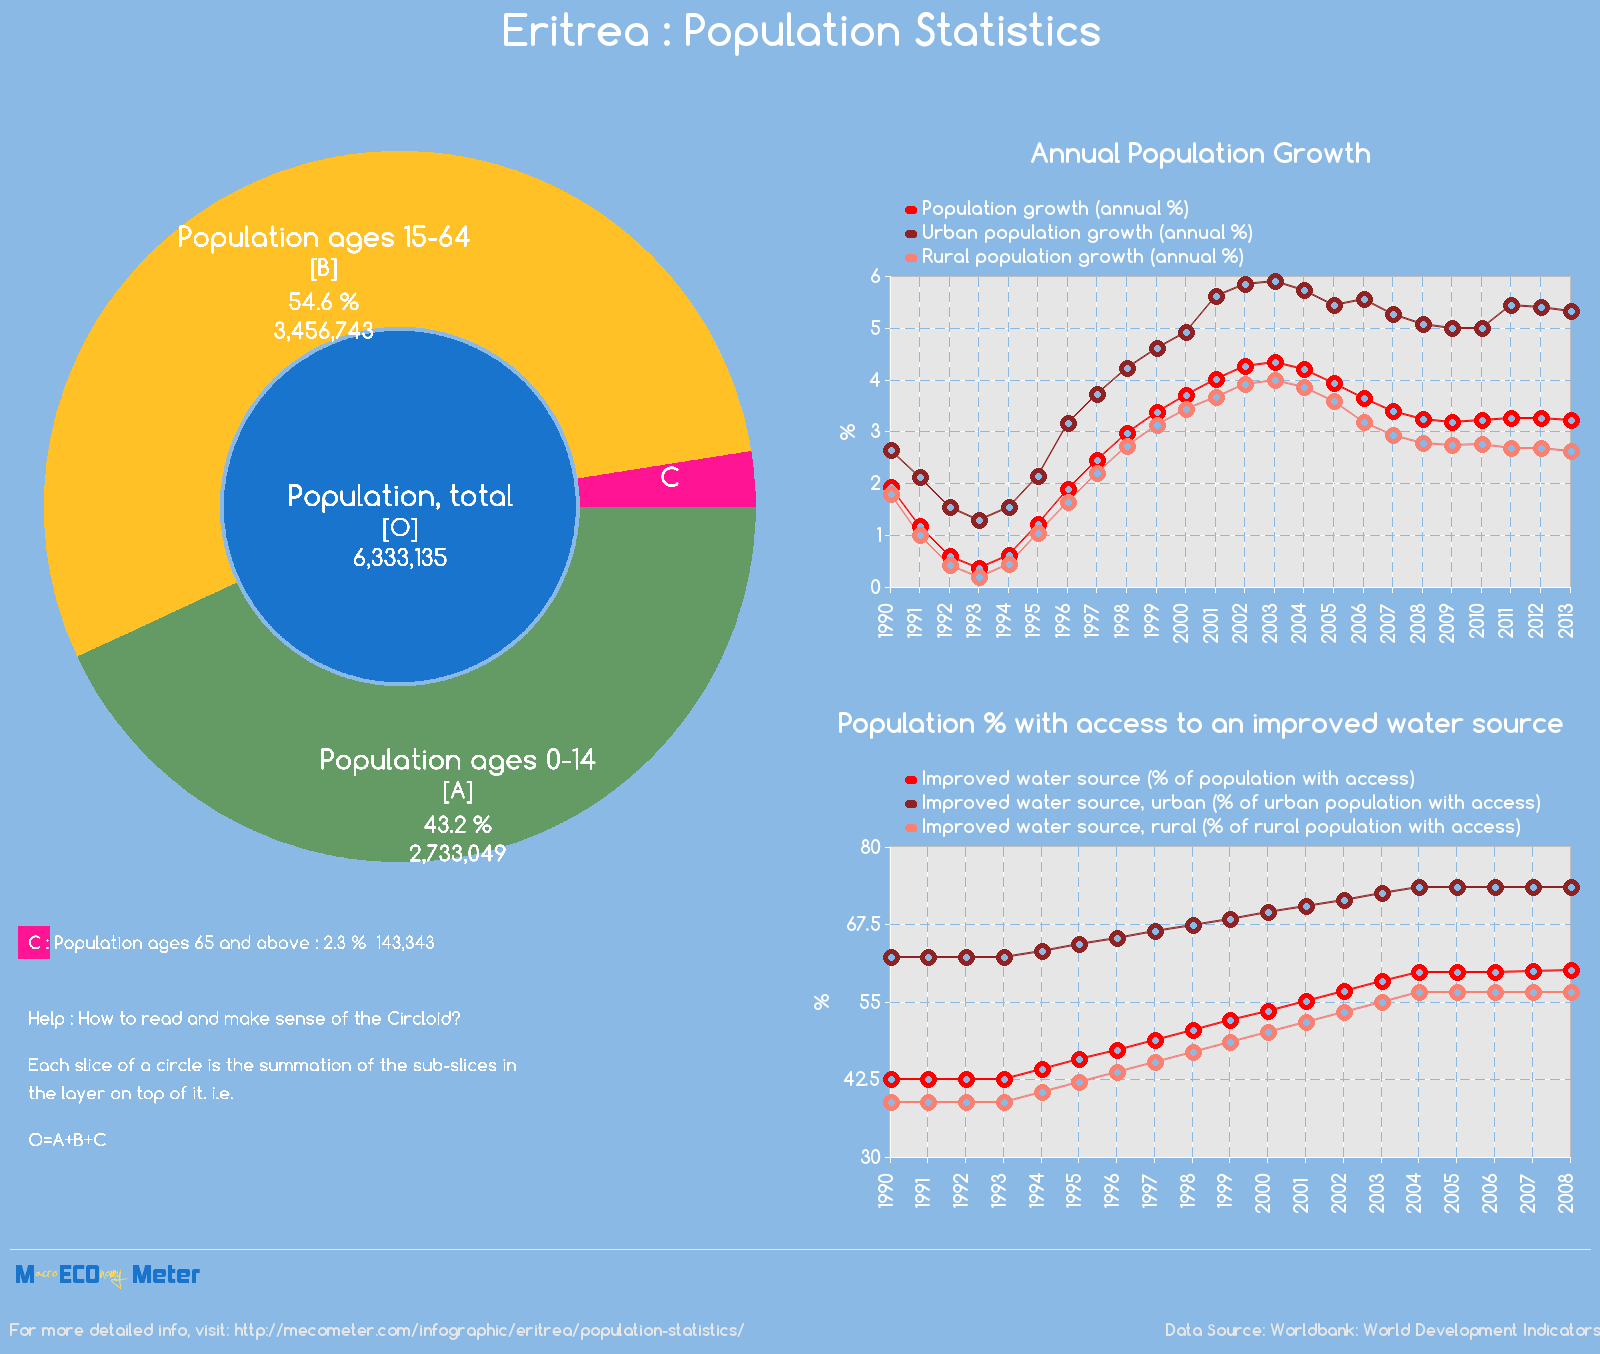 Eritrea : Population Statistics